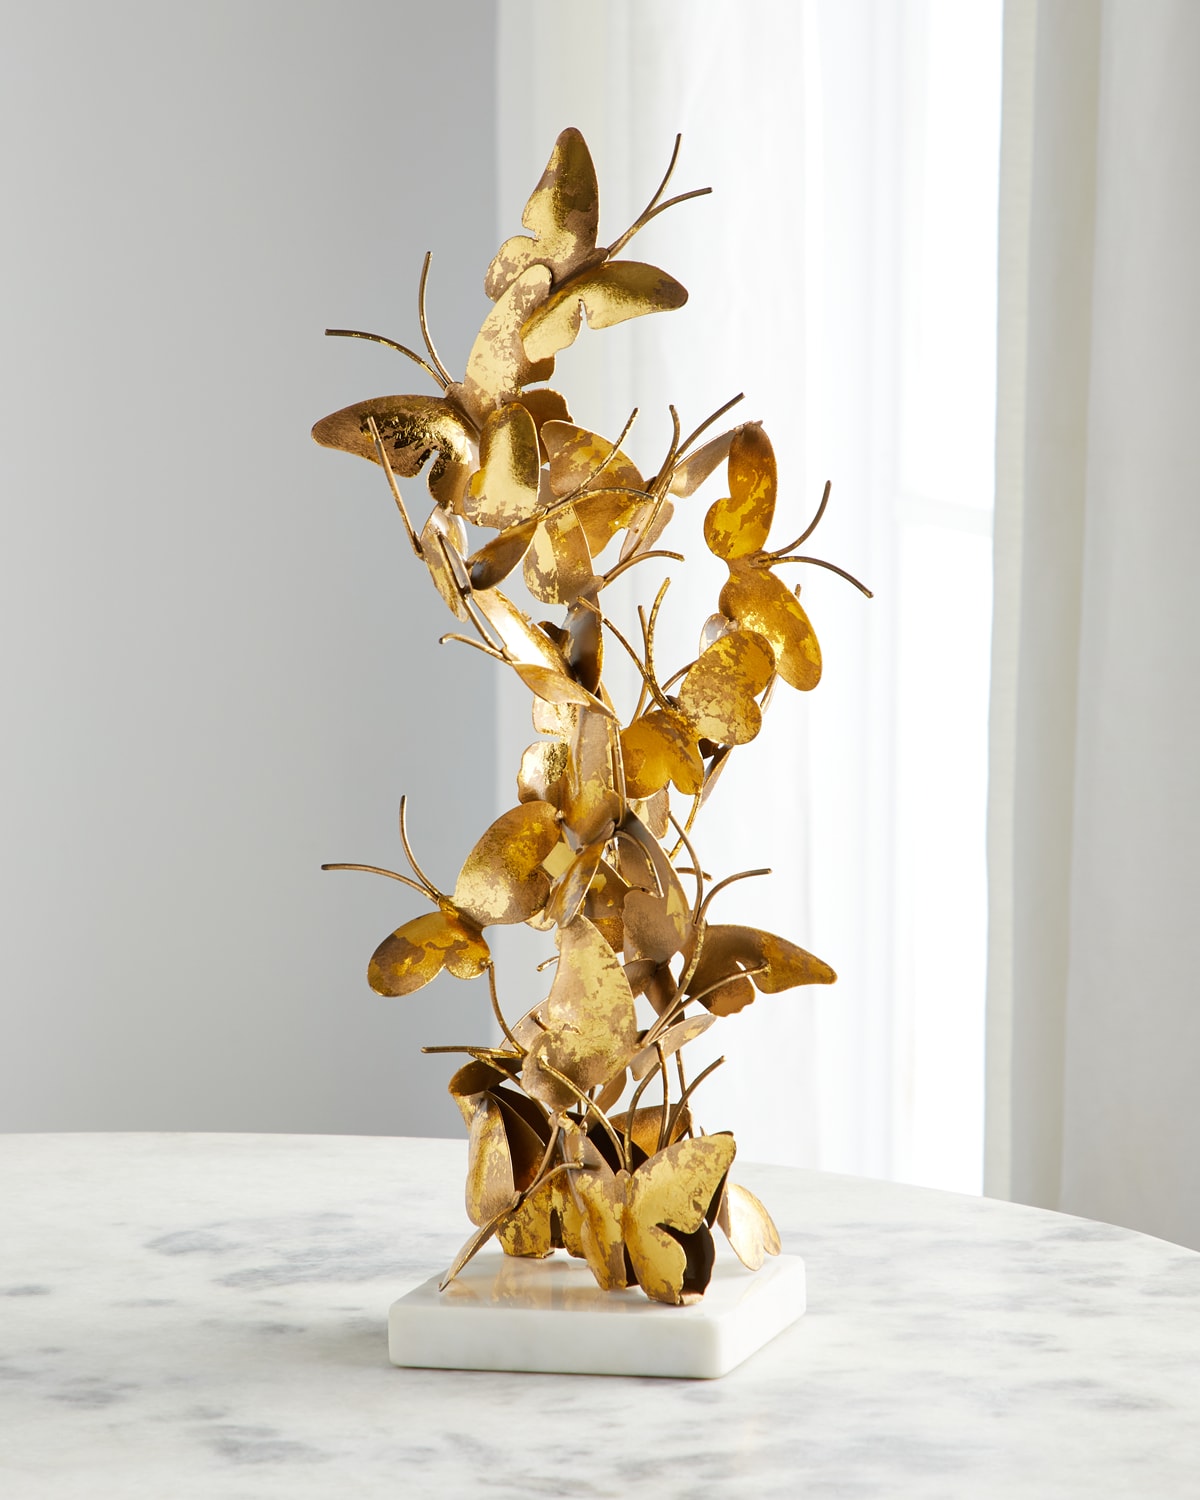 Decorative Gold Sculpture | horchow.com